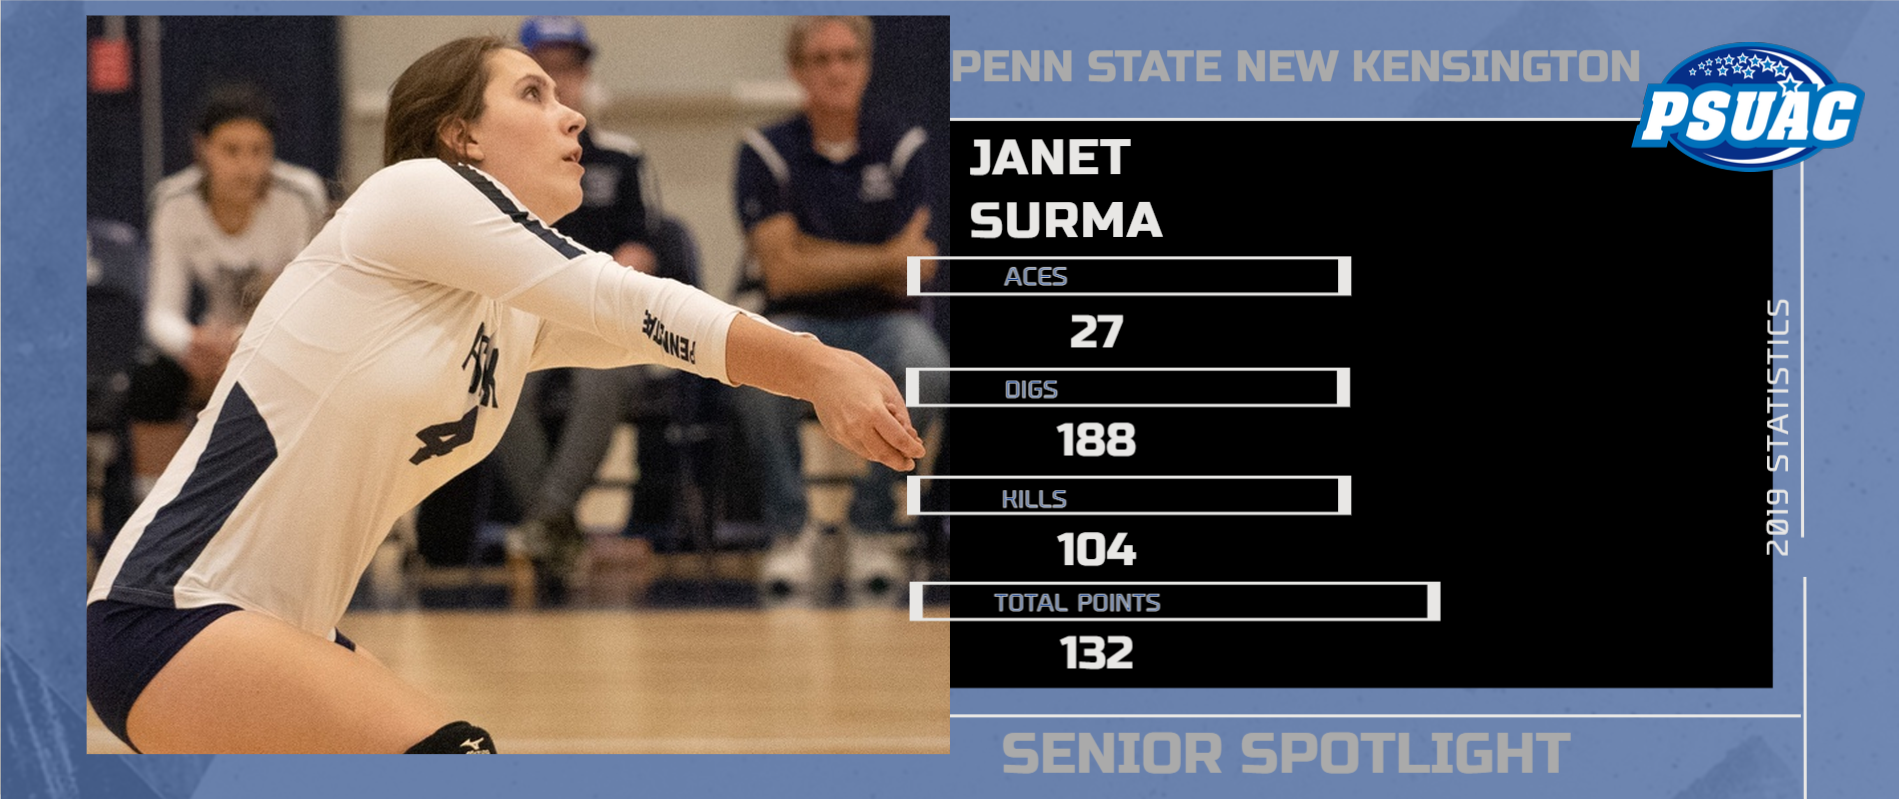 Penn State New Kensington's Janet Surma.